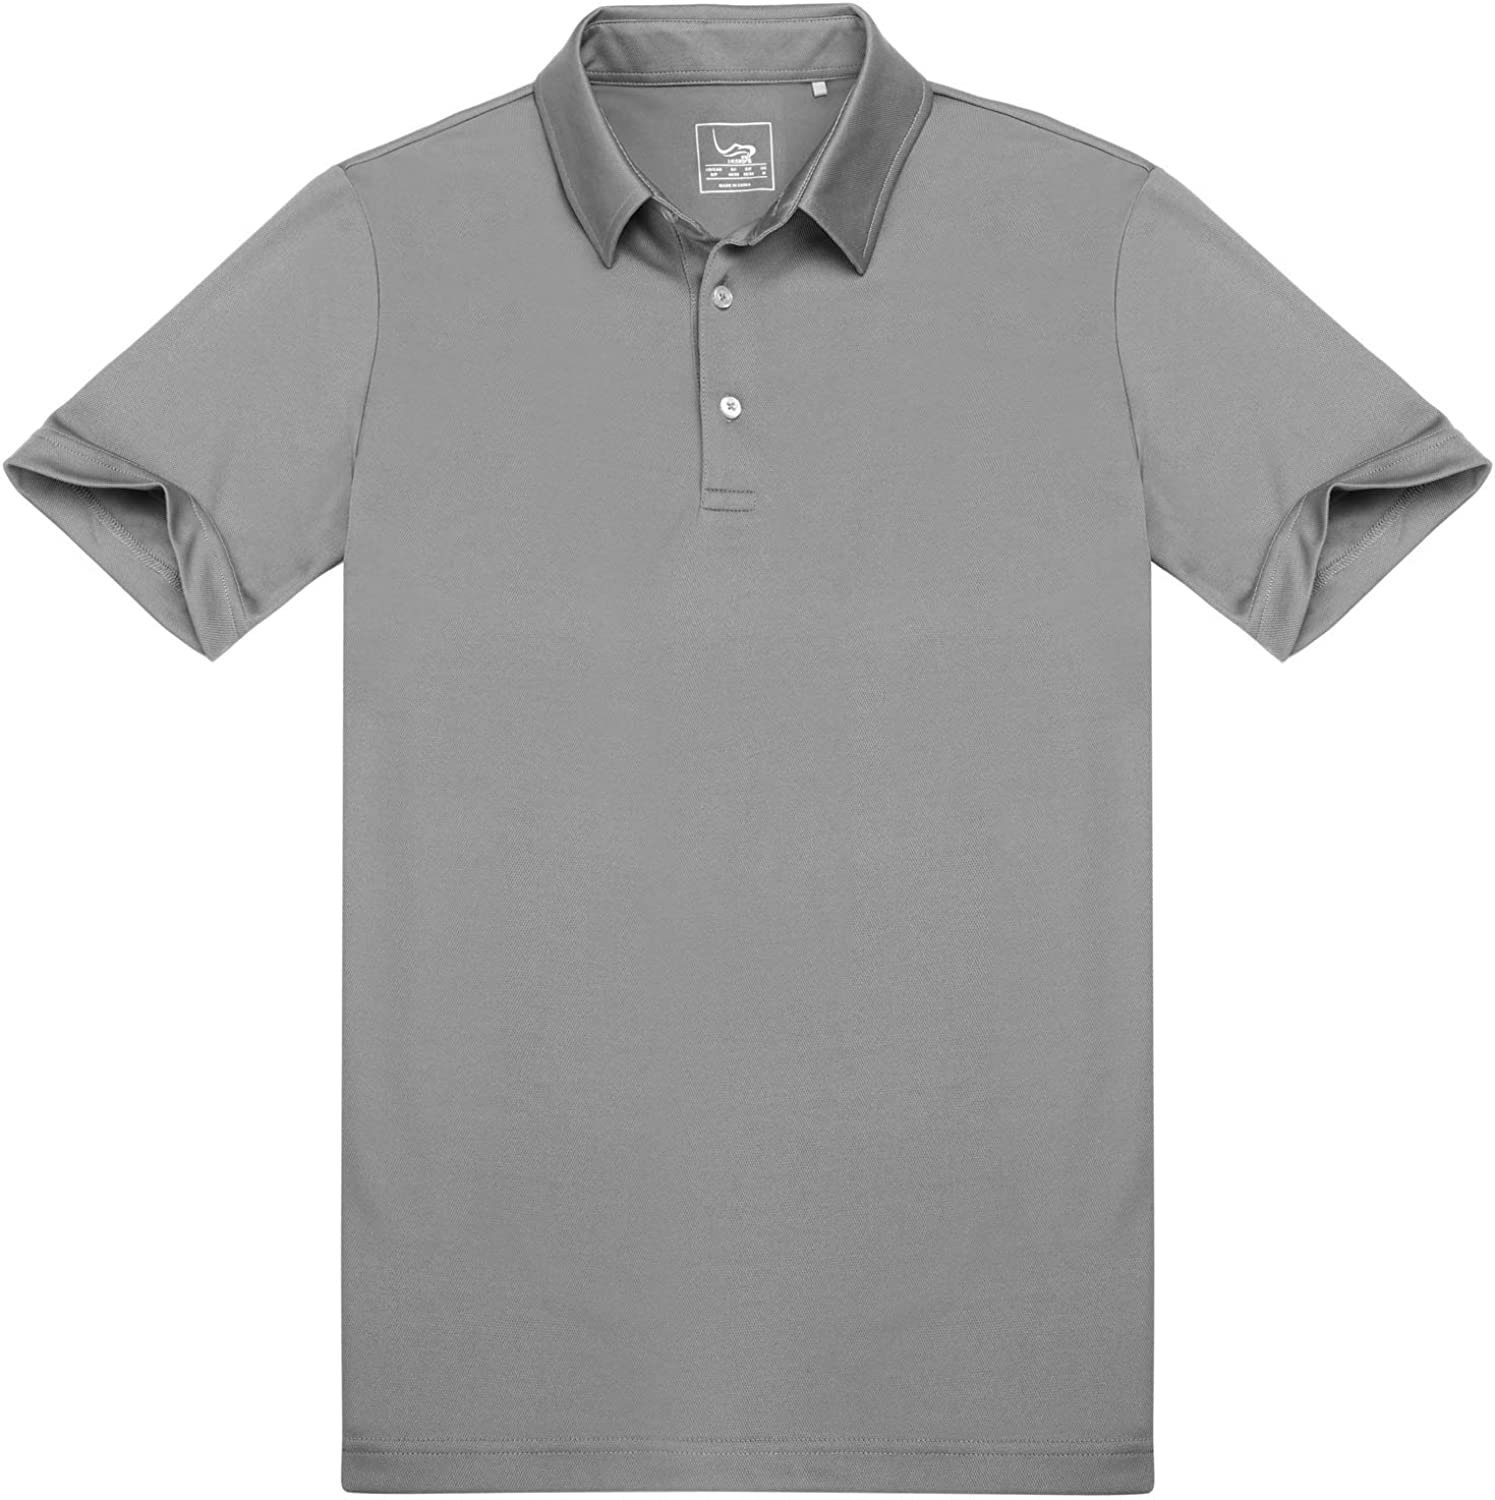 Grau Gemütlich DEBAIJIA Standard Golf Leicht Poloshirt Fit Poloshirt DEBAIJIA Herren Kurzarm